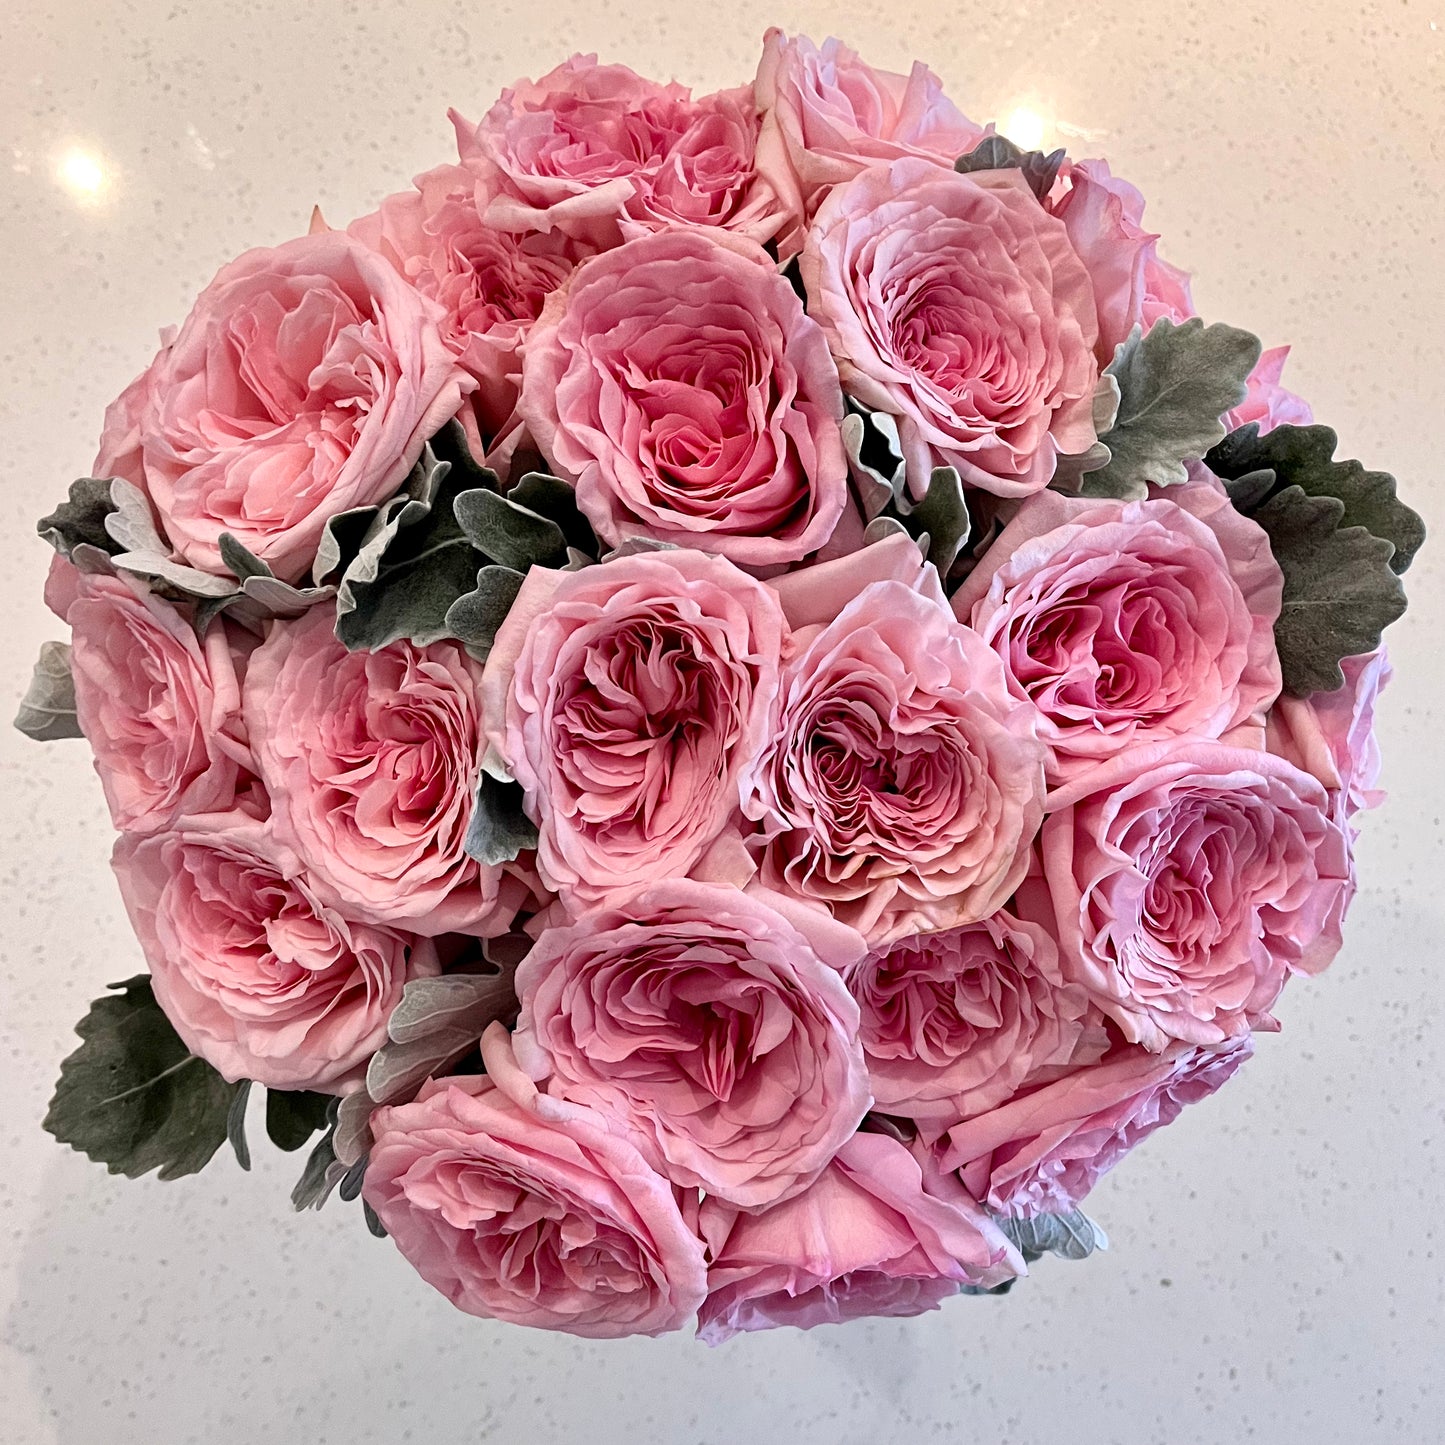 Pink O’Hara Garden Roses in a Vase